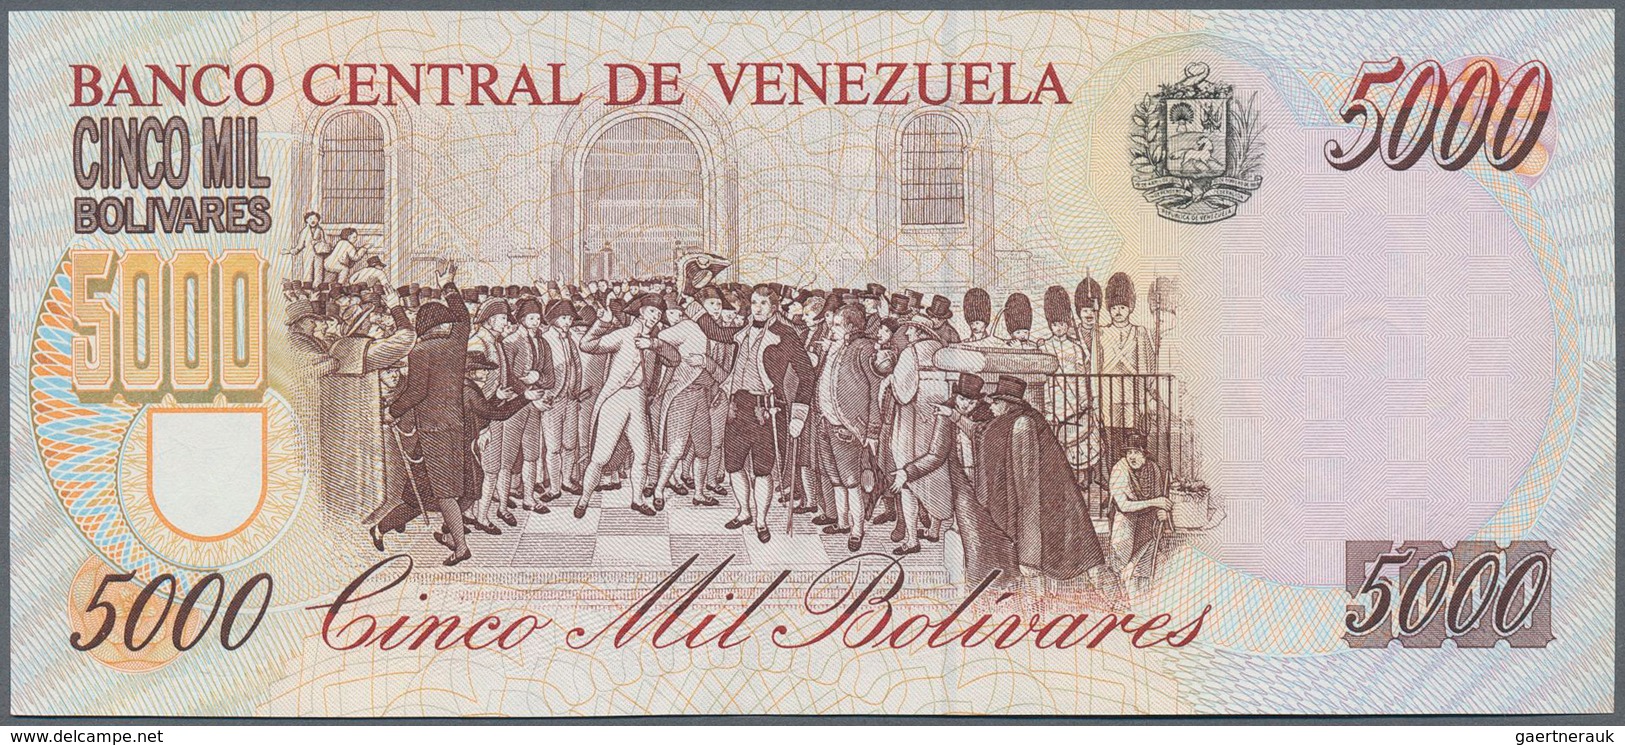 02606 Venezuela: 5000 Bolivares 1998 P. 78s, With Watermark, Zero Serial Numbers, Without Specimen Overpri - Venezuela